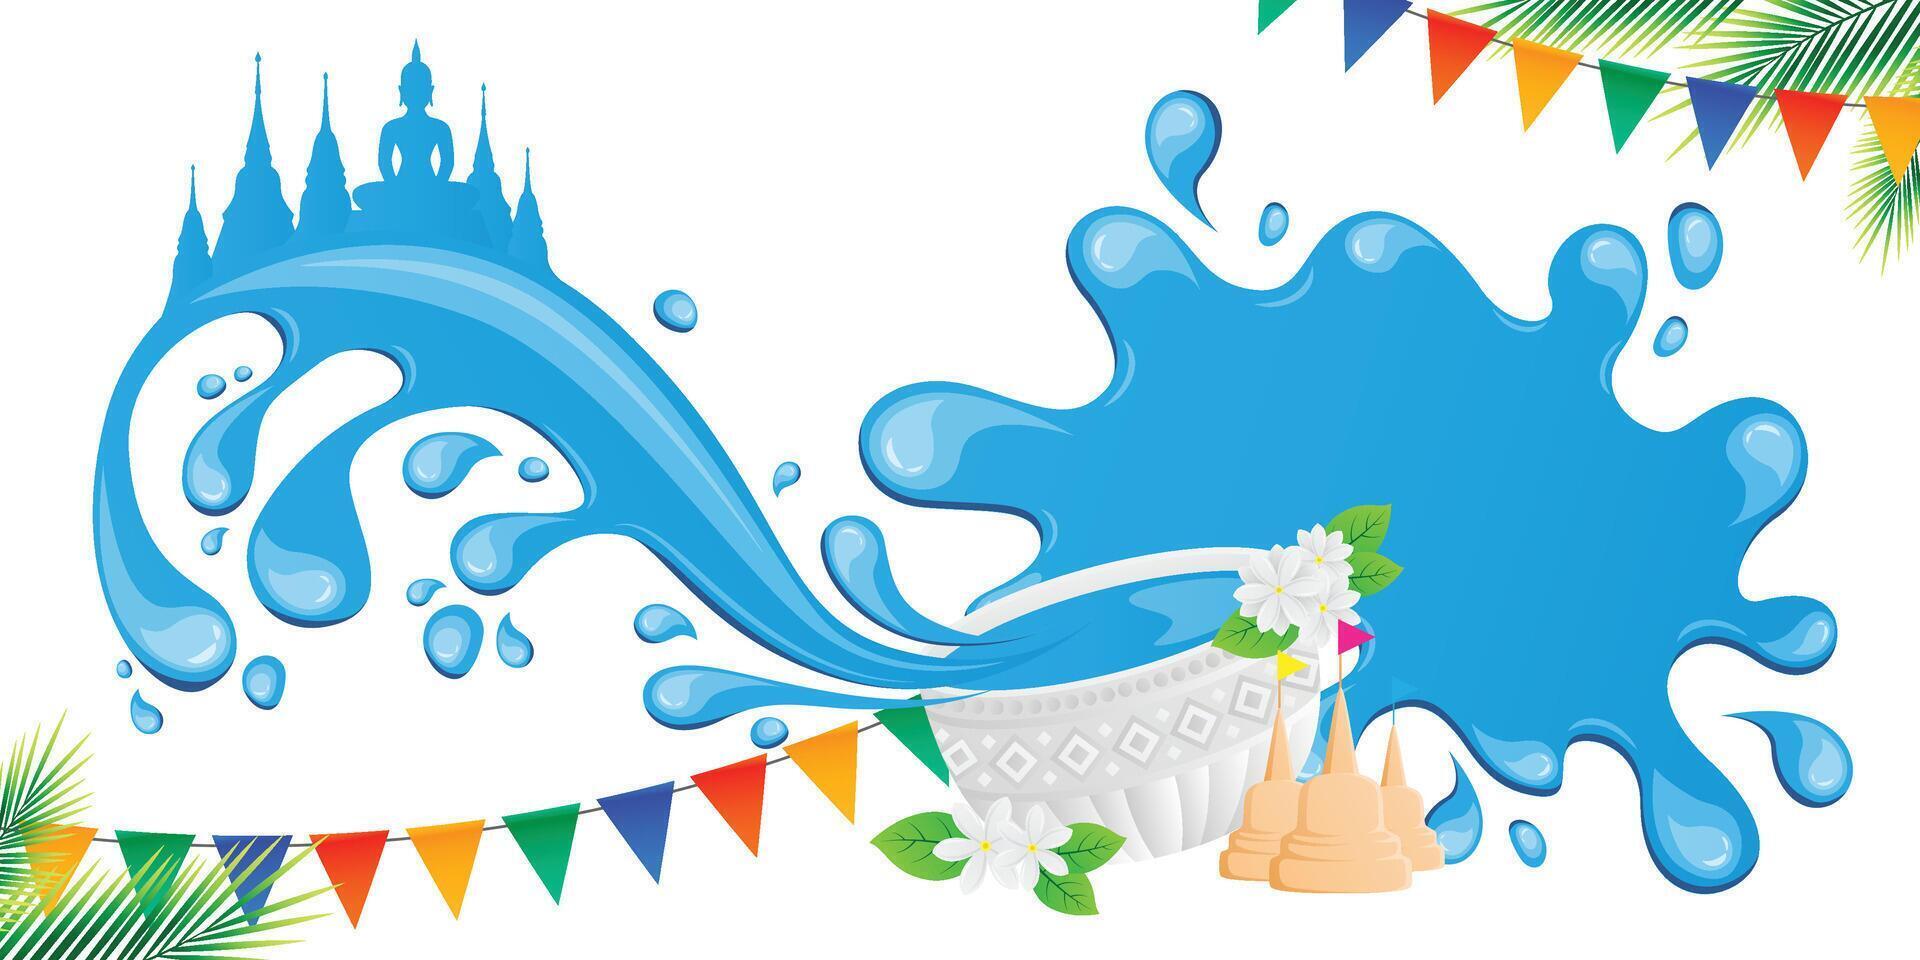 water summer Songkran festival thailand culture Banner backgroung design vector